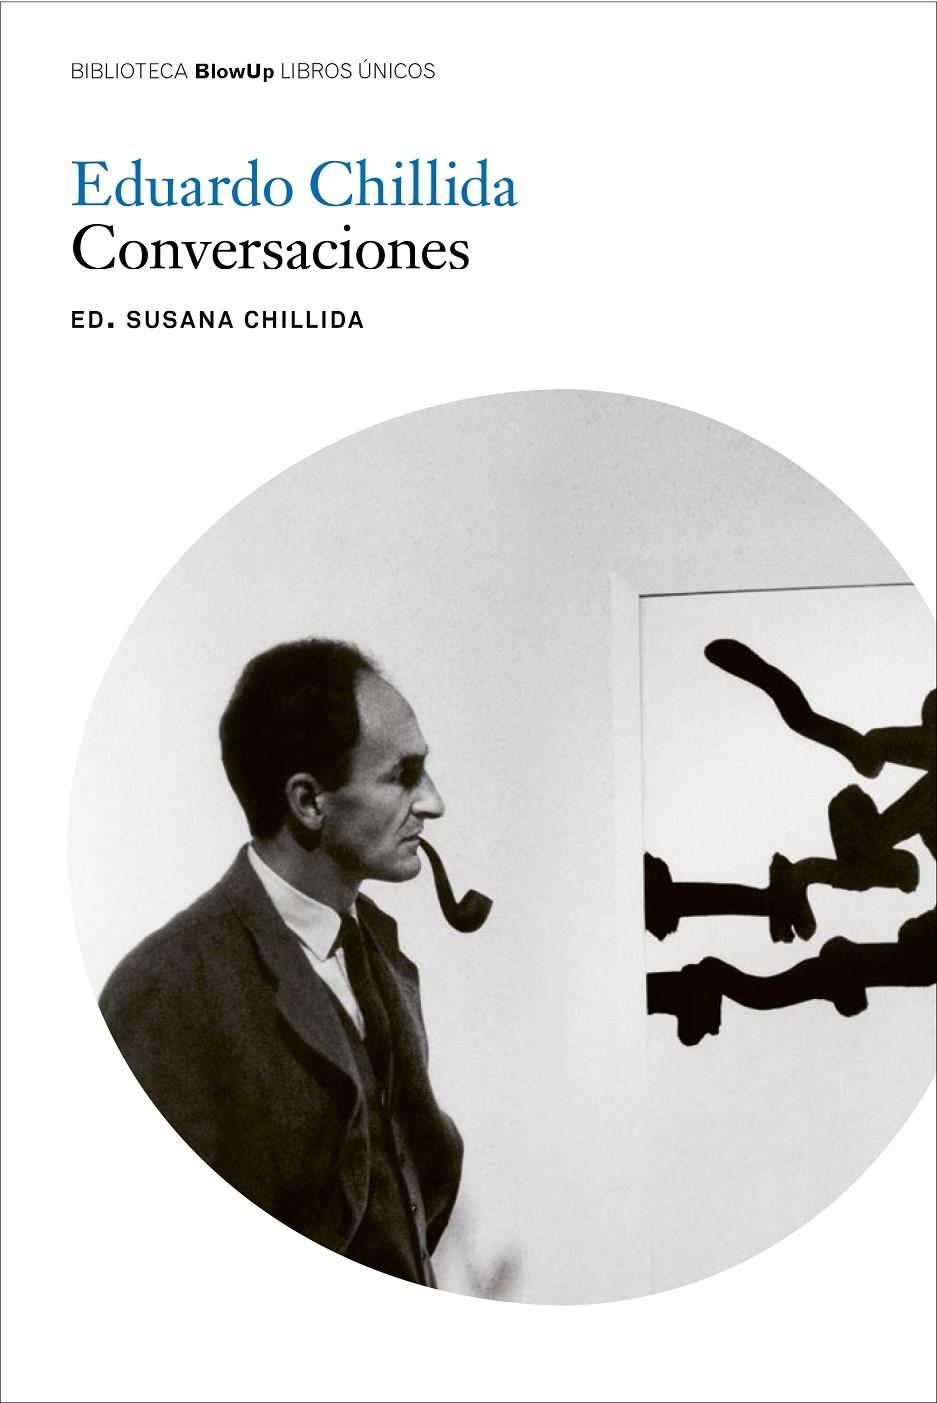 Eduardo Chillida. Conversaciones. 